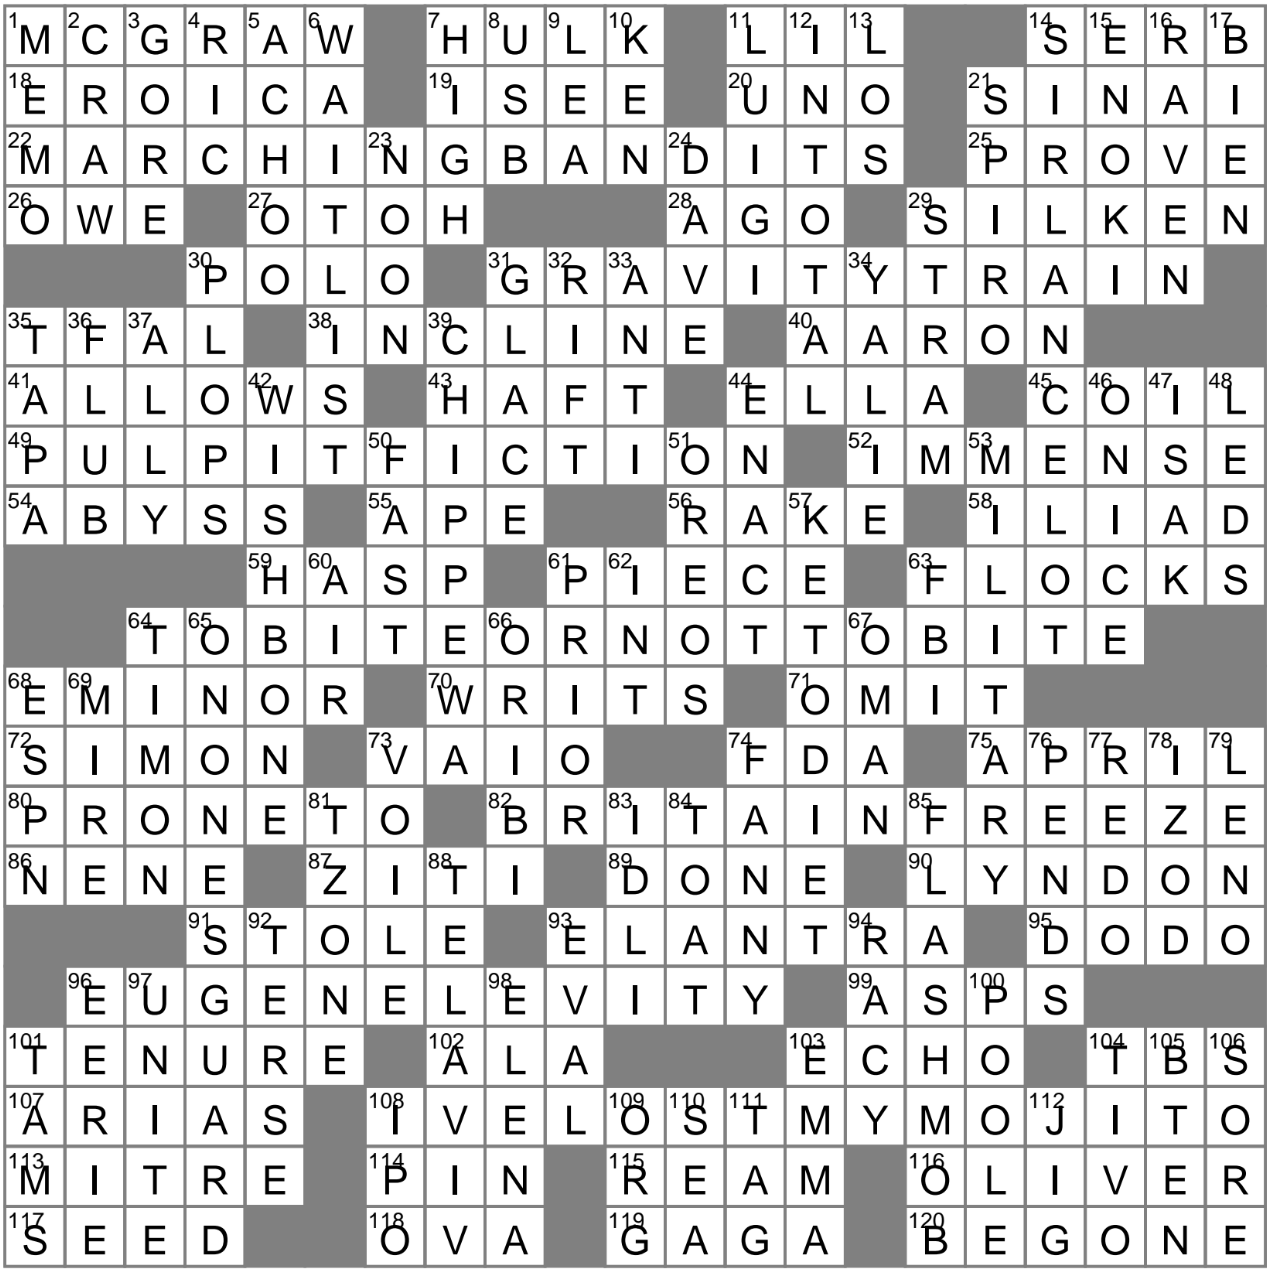 Watery expanse Crossword Clue LA Times - News